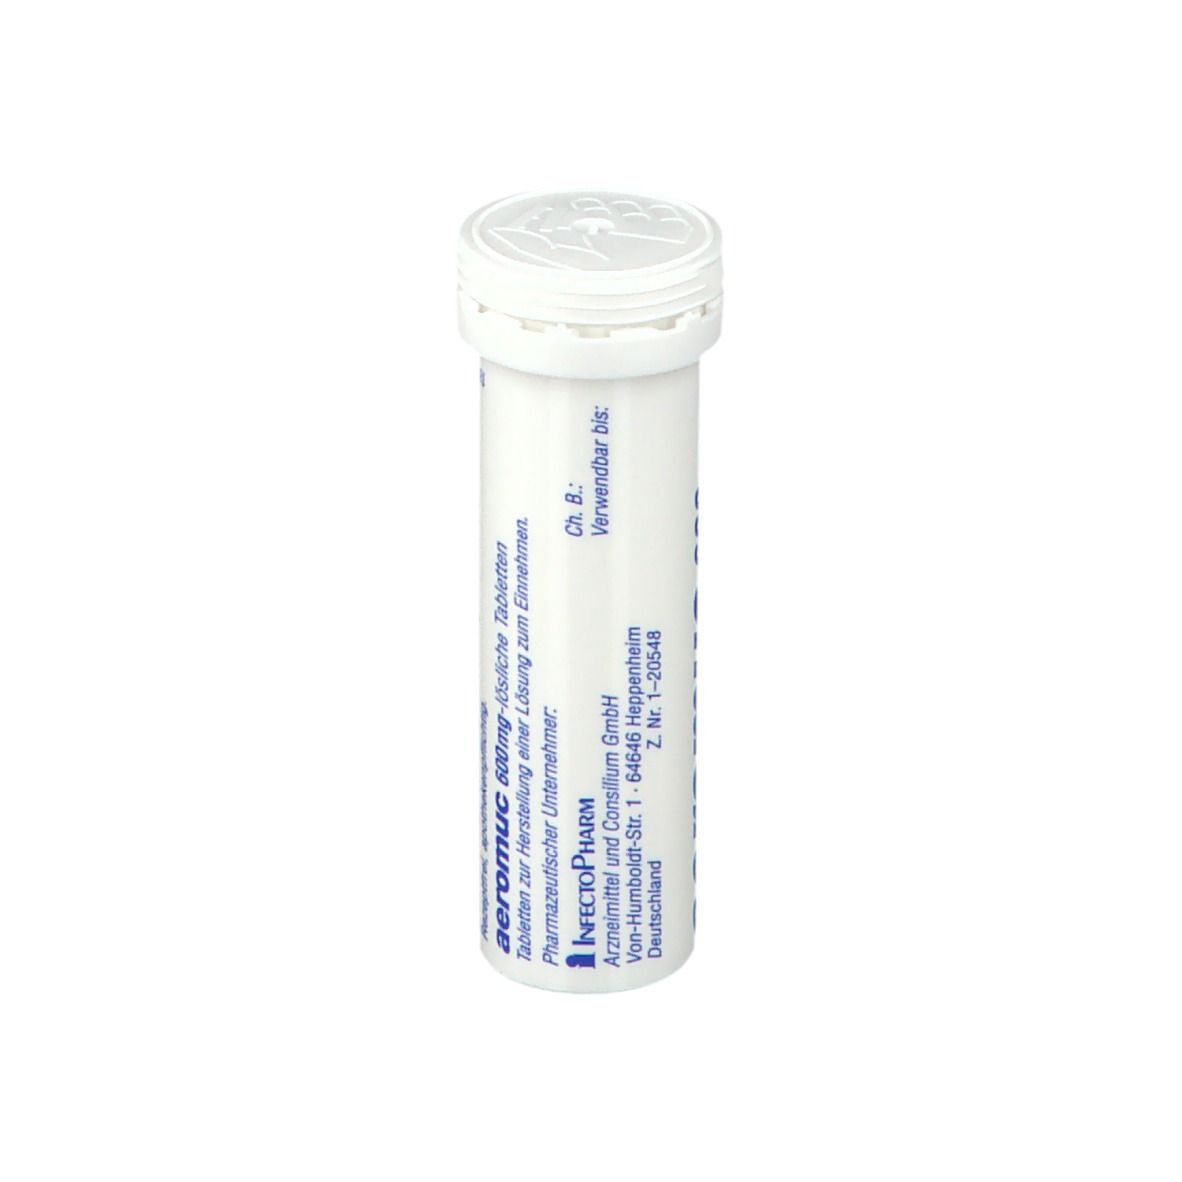 aeromuc 600 mg